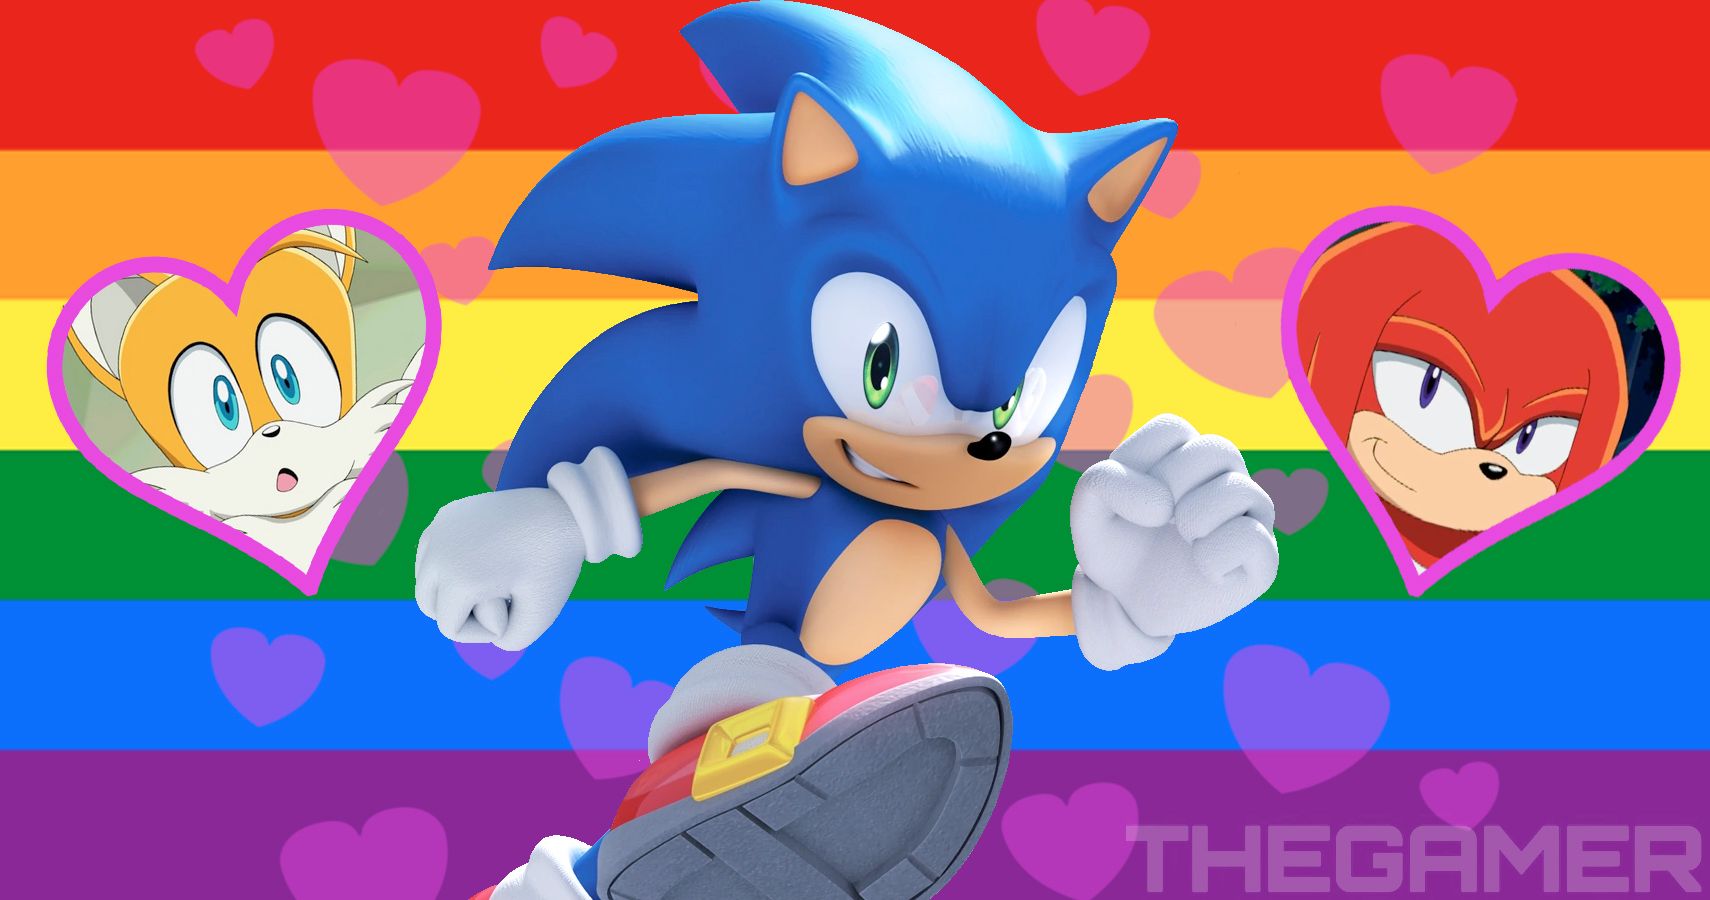 sonic and shadow gay pride meme